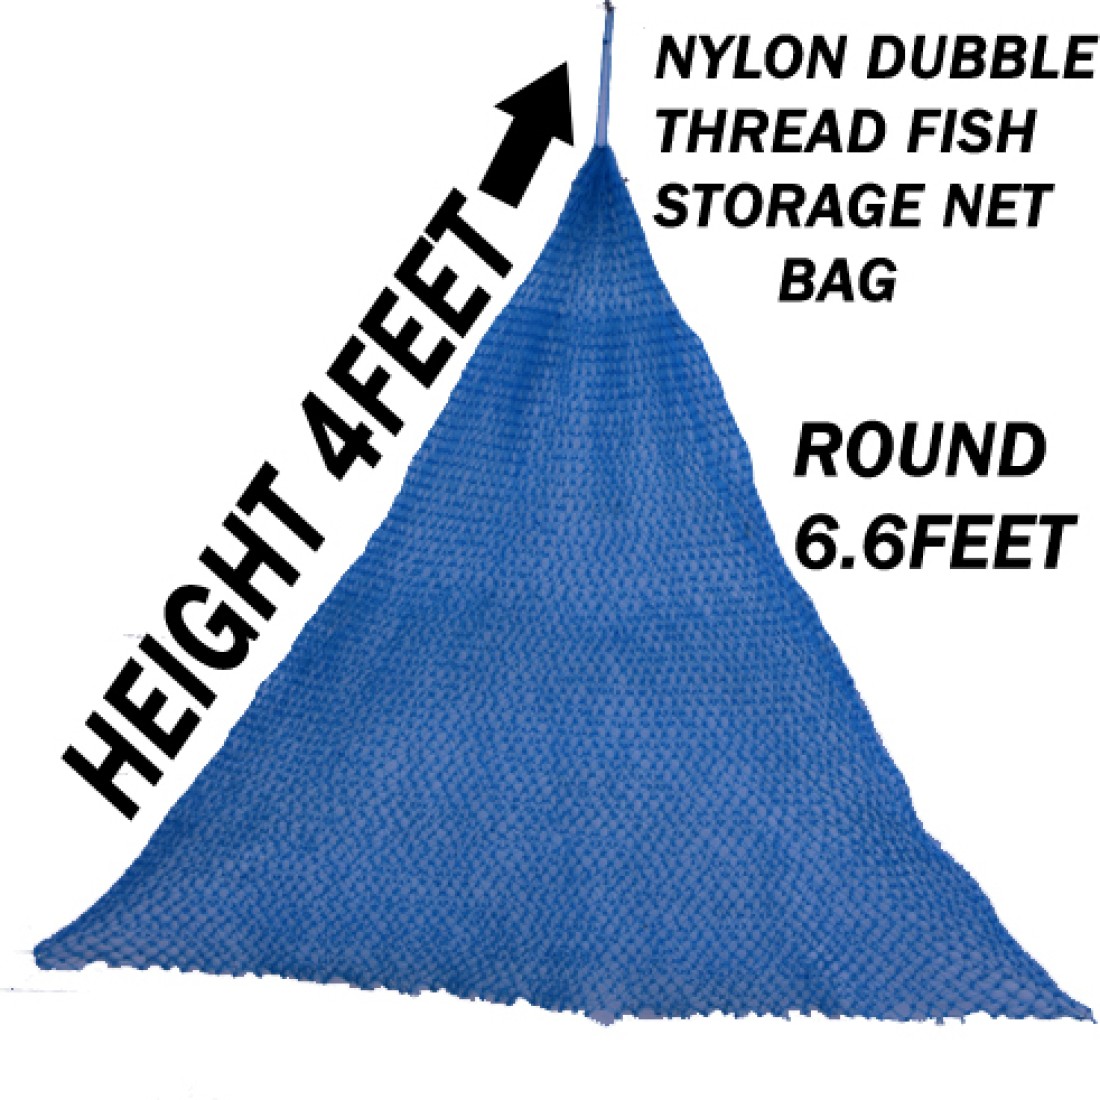 PURKAIT FISHNET NYLON DUBBLE THREAD FISH STORAGE NYLON NET BAG